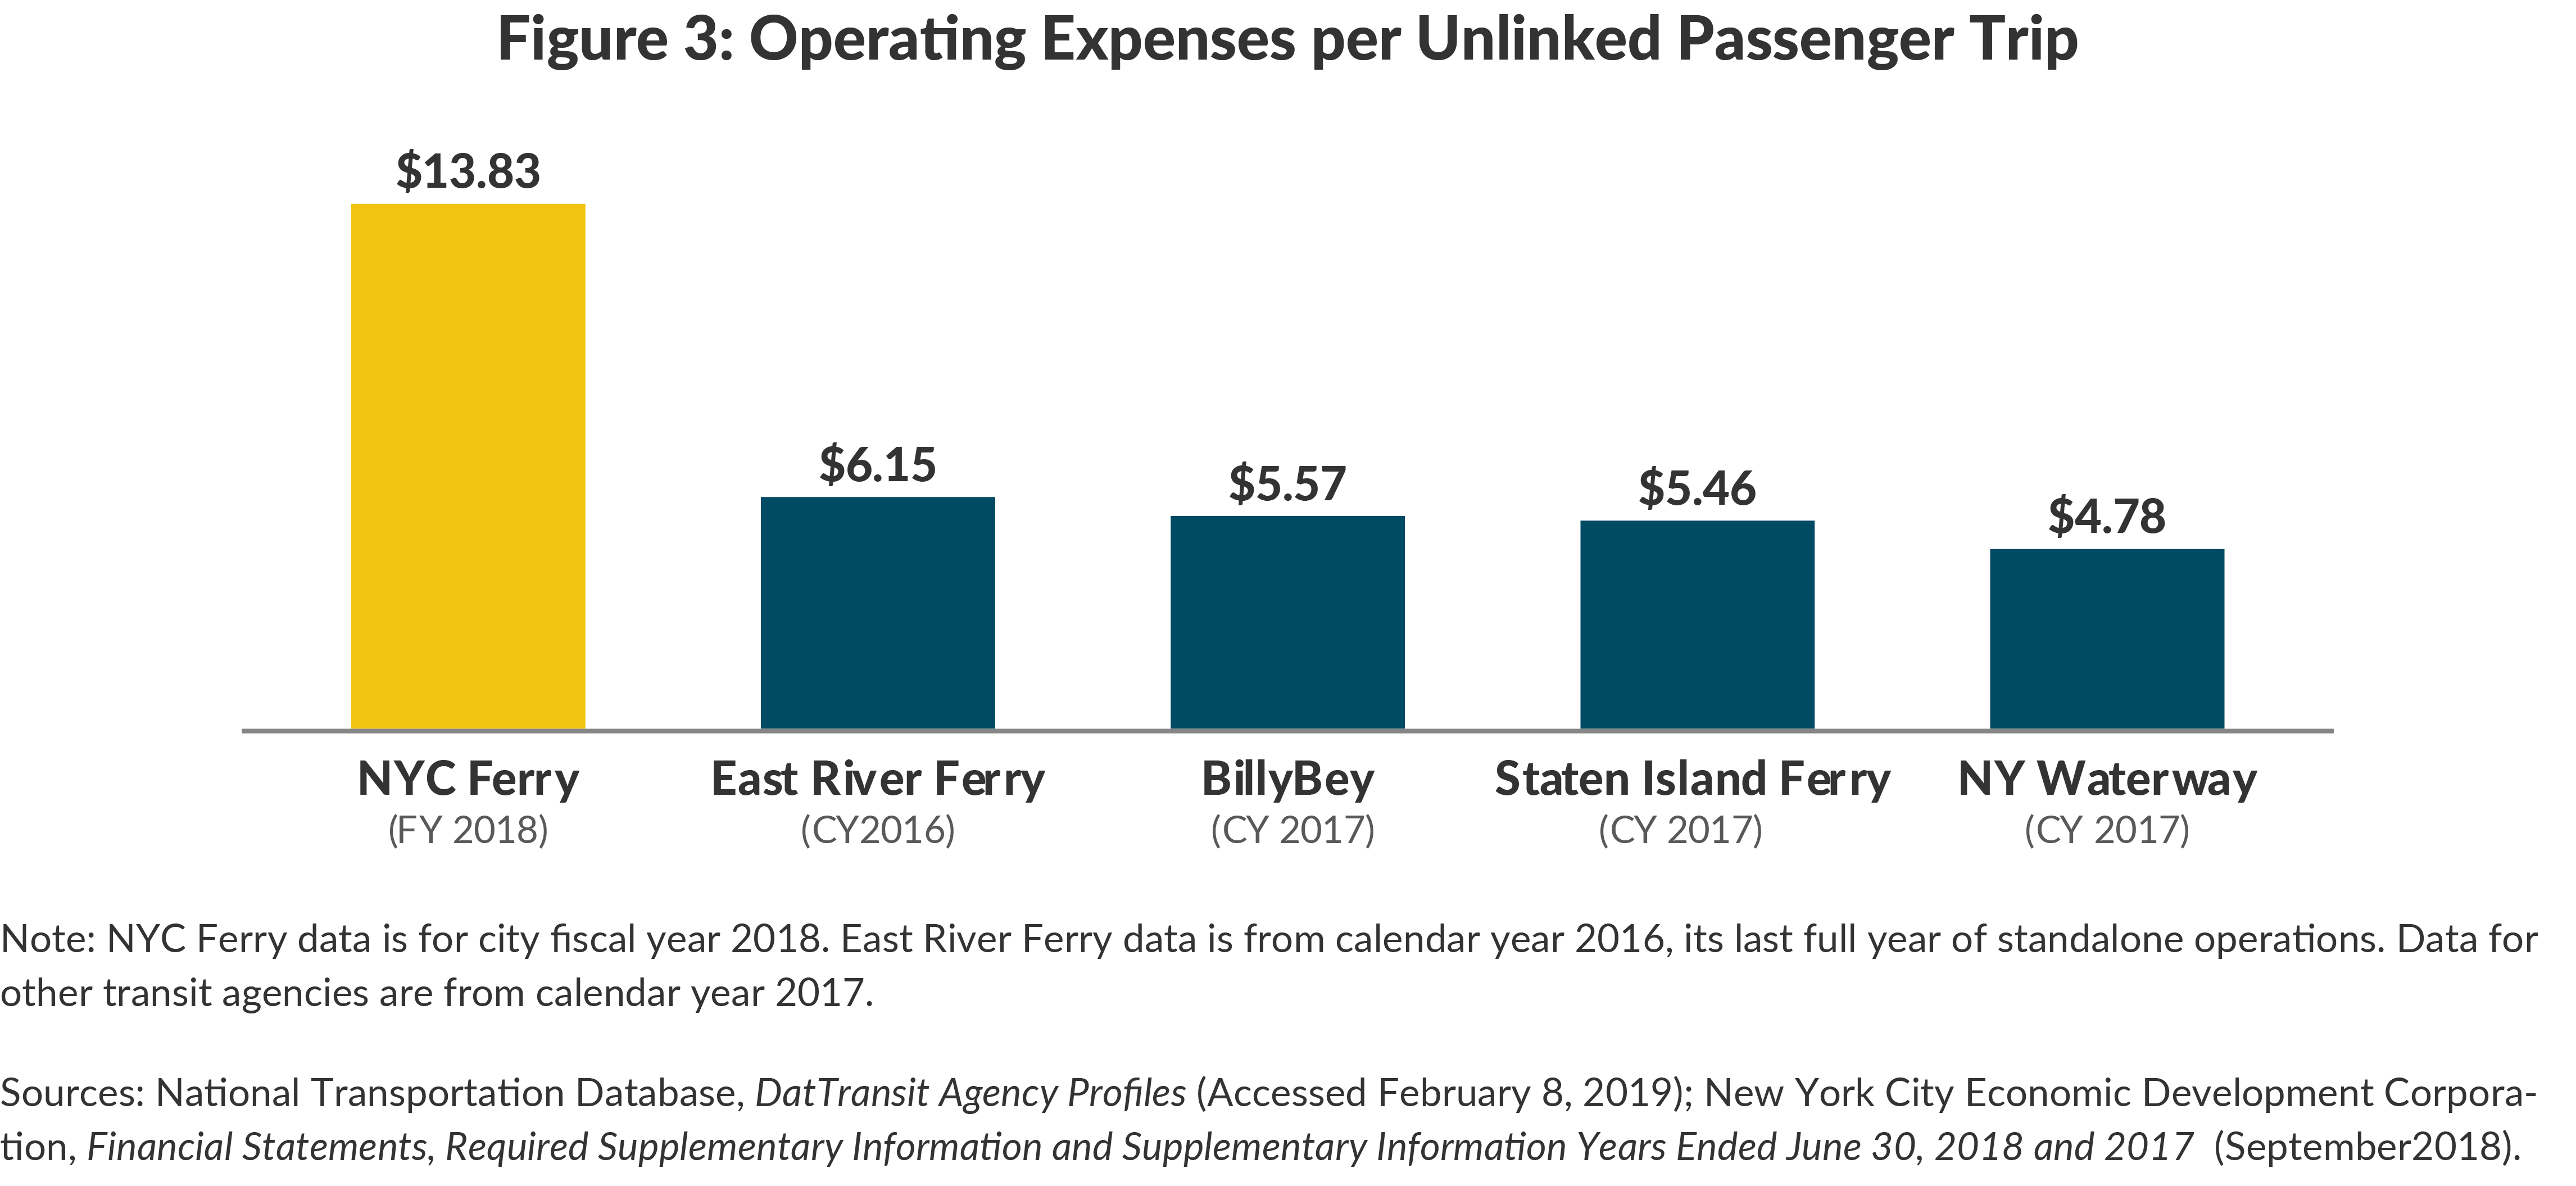 Figure 3. Operating Expenses per Unlinked Passenger Trip, 2017 